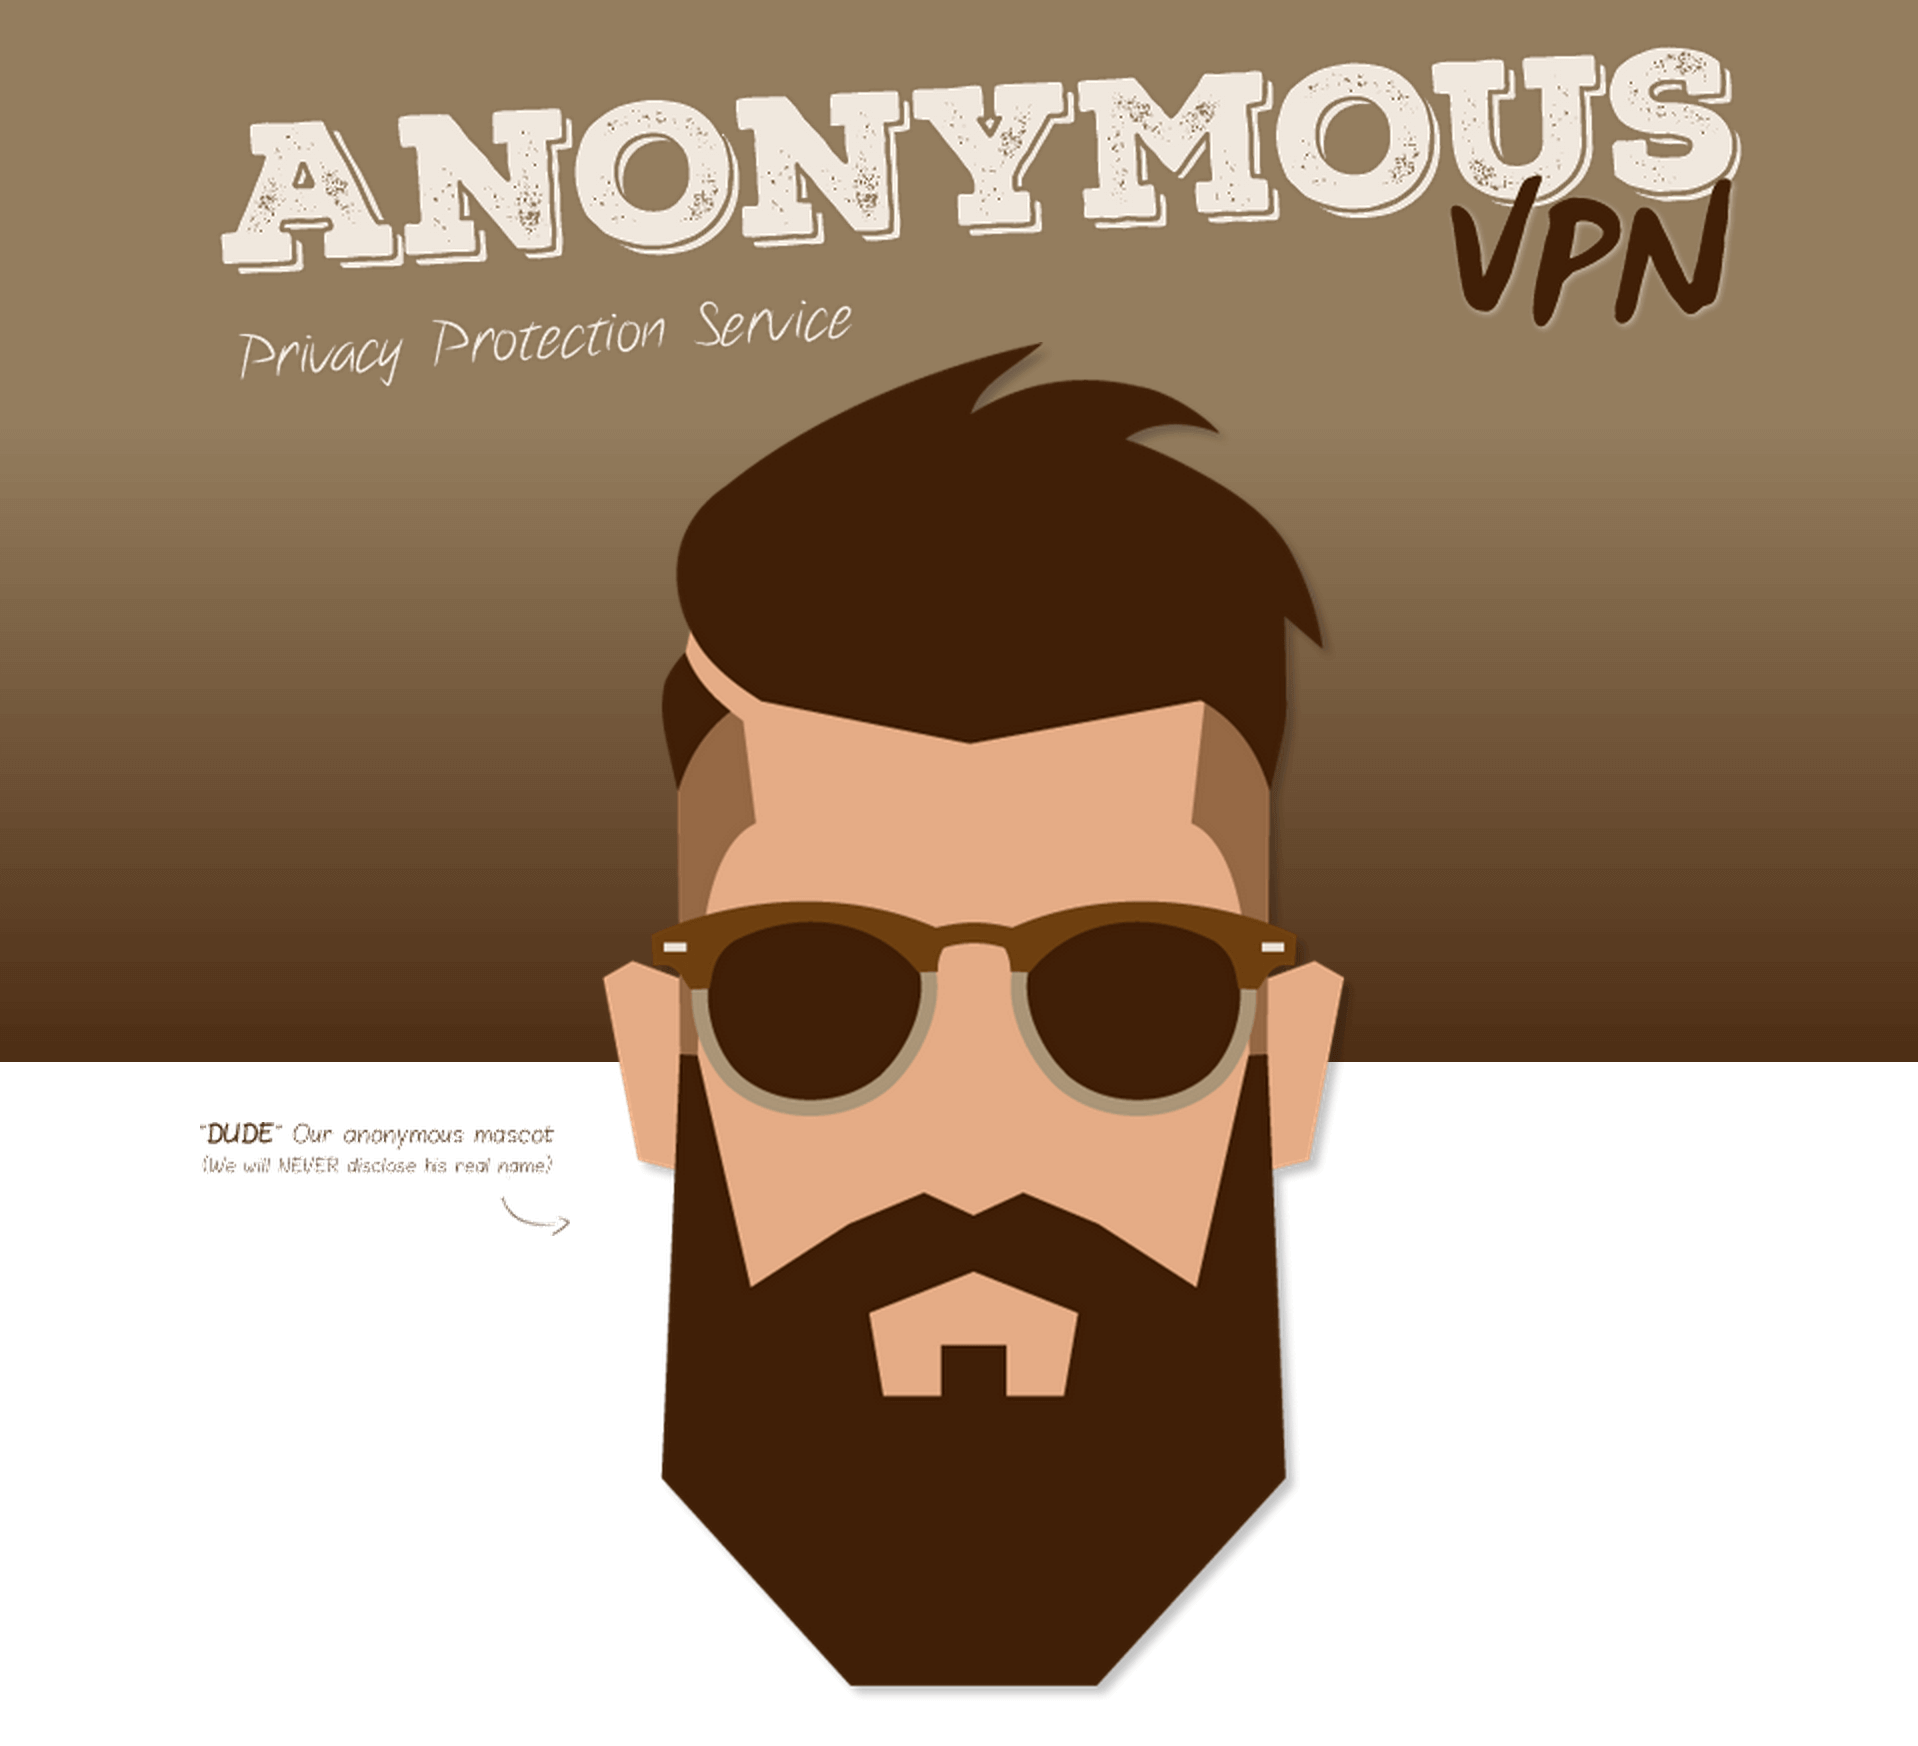 Er anonym VPN legit?